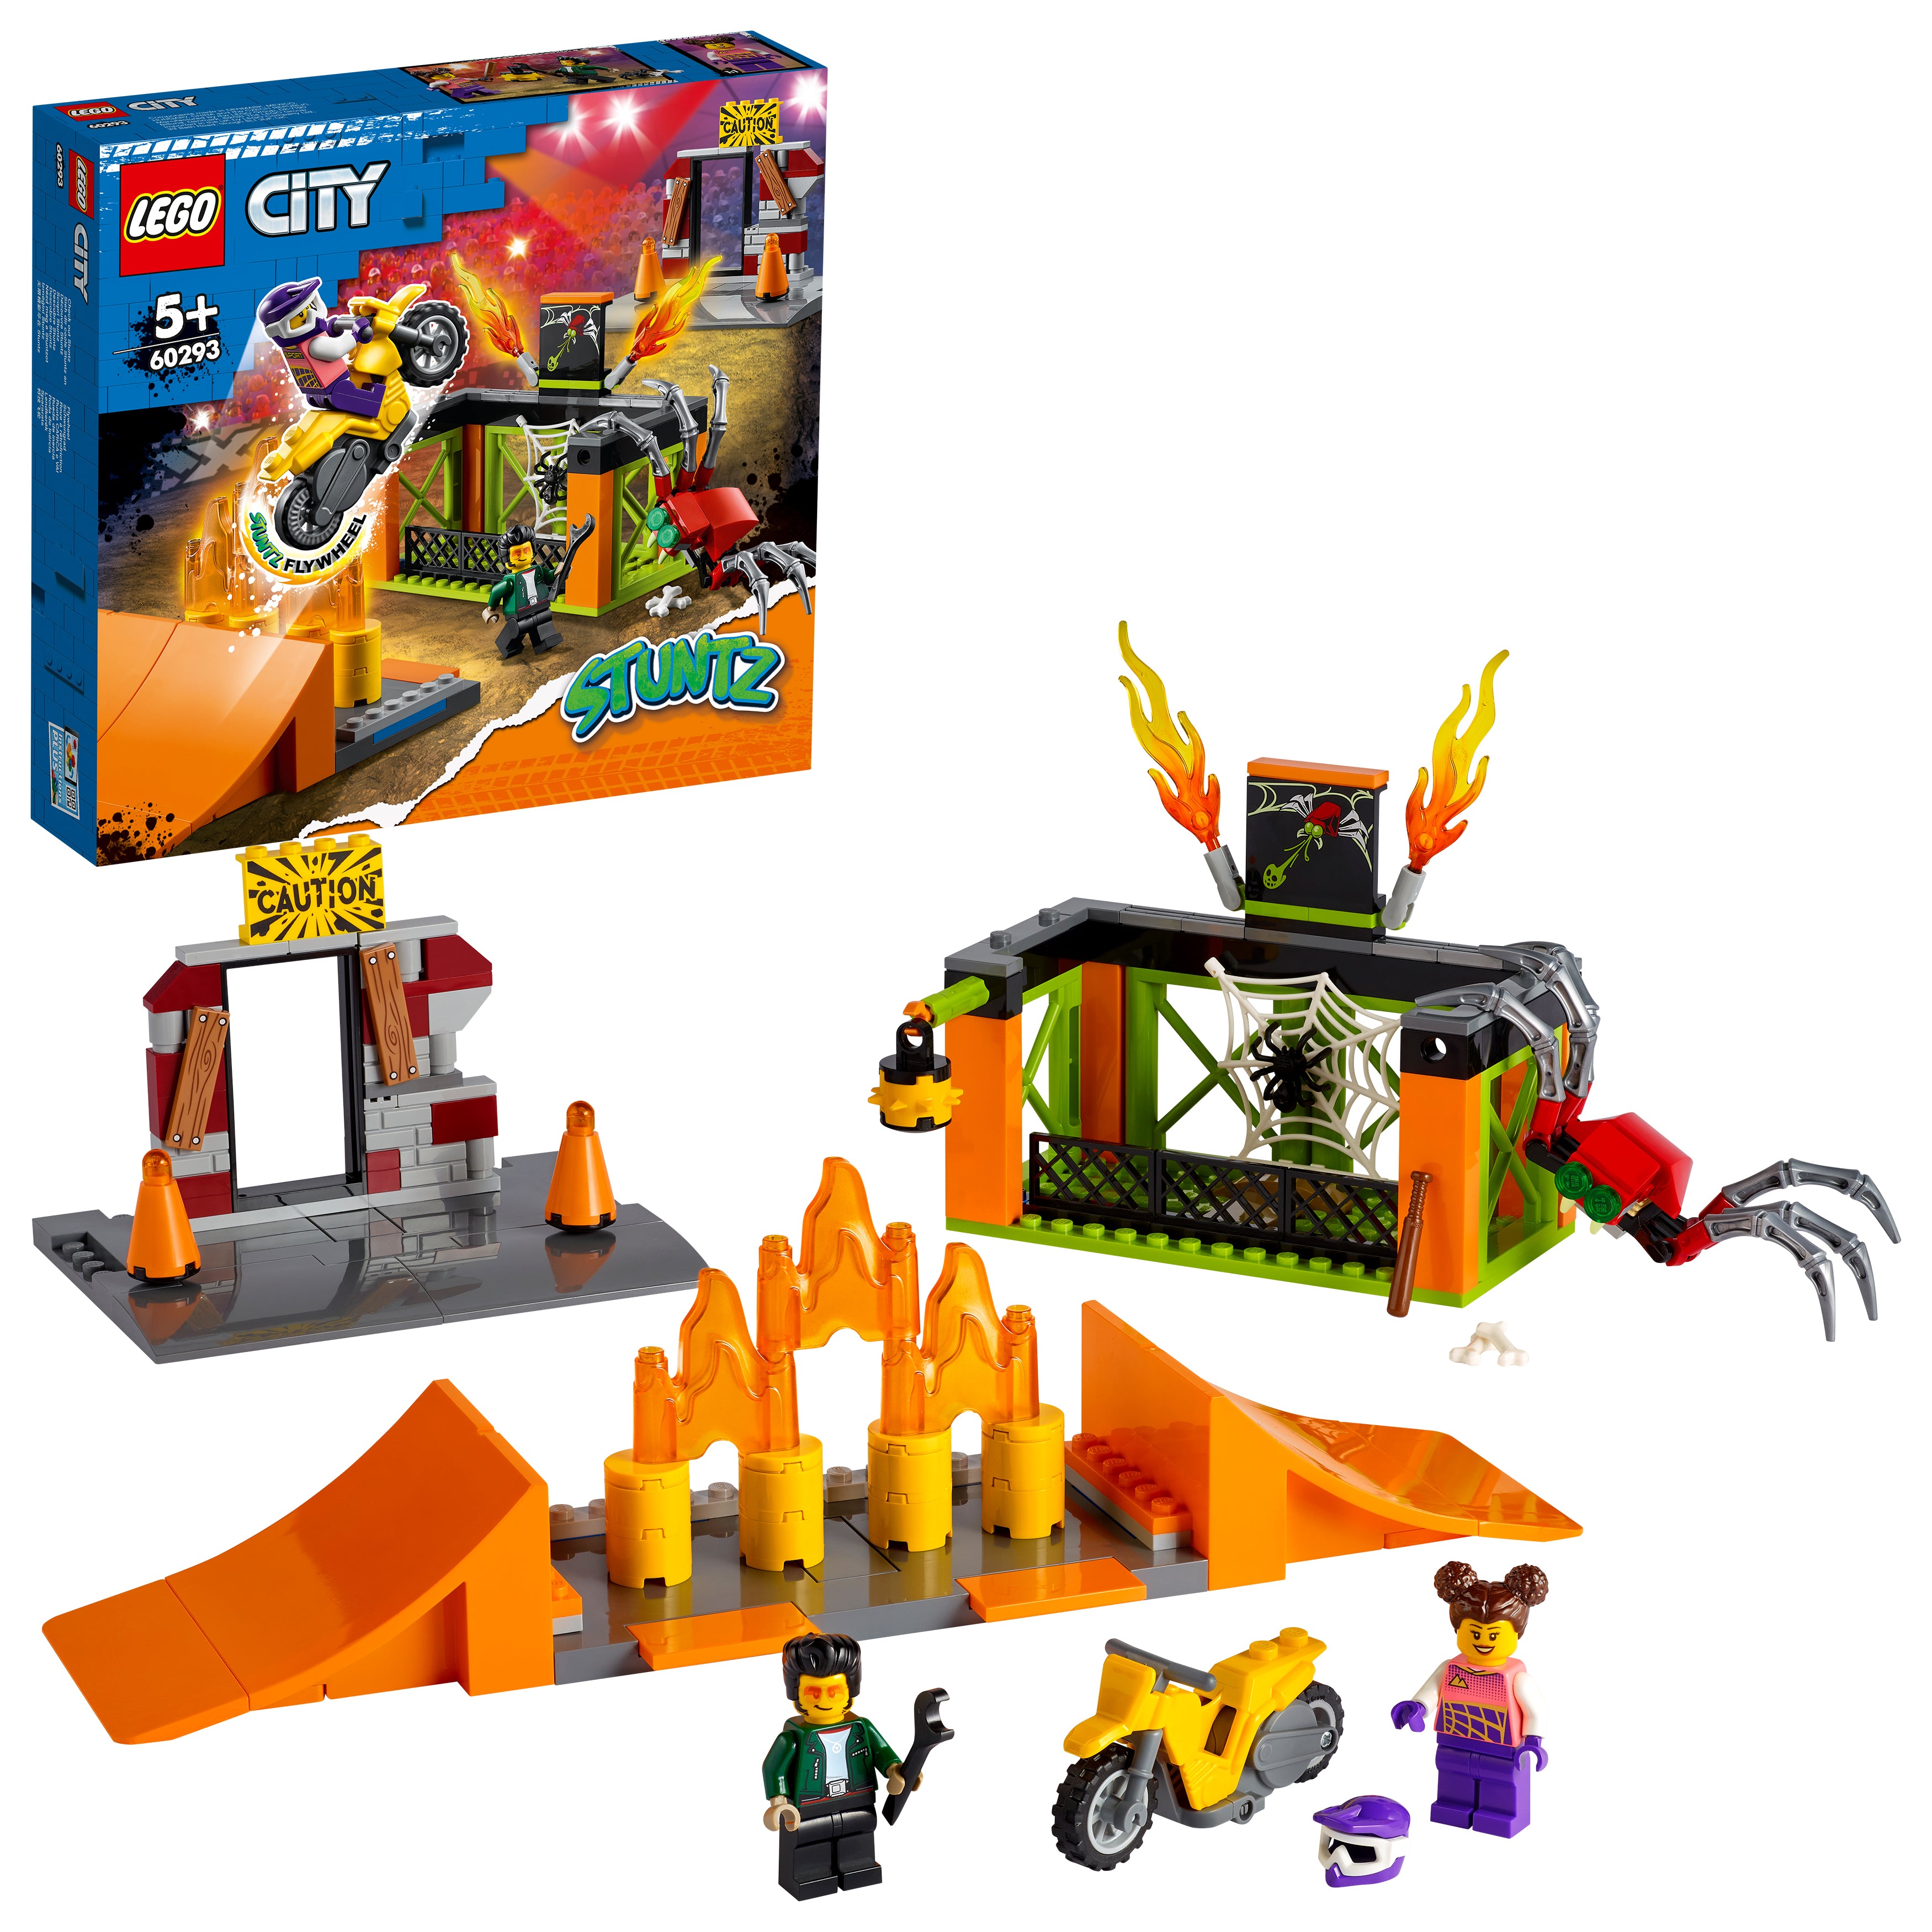 Lego 60293 City Stunt Park